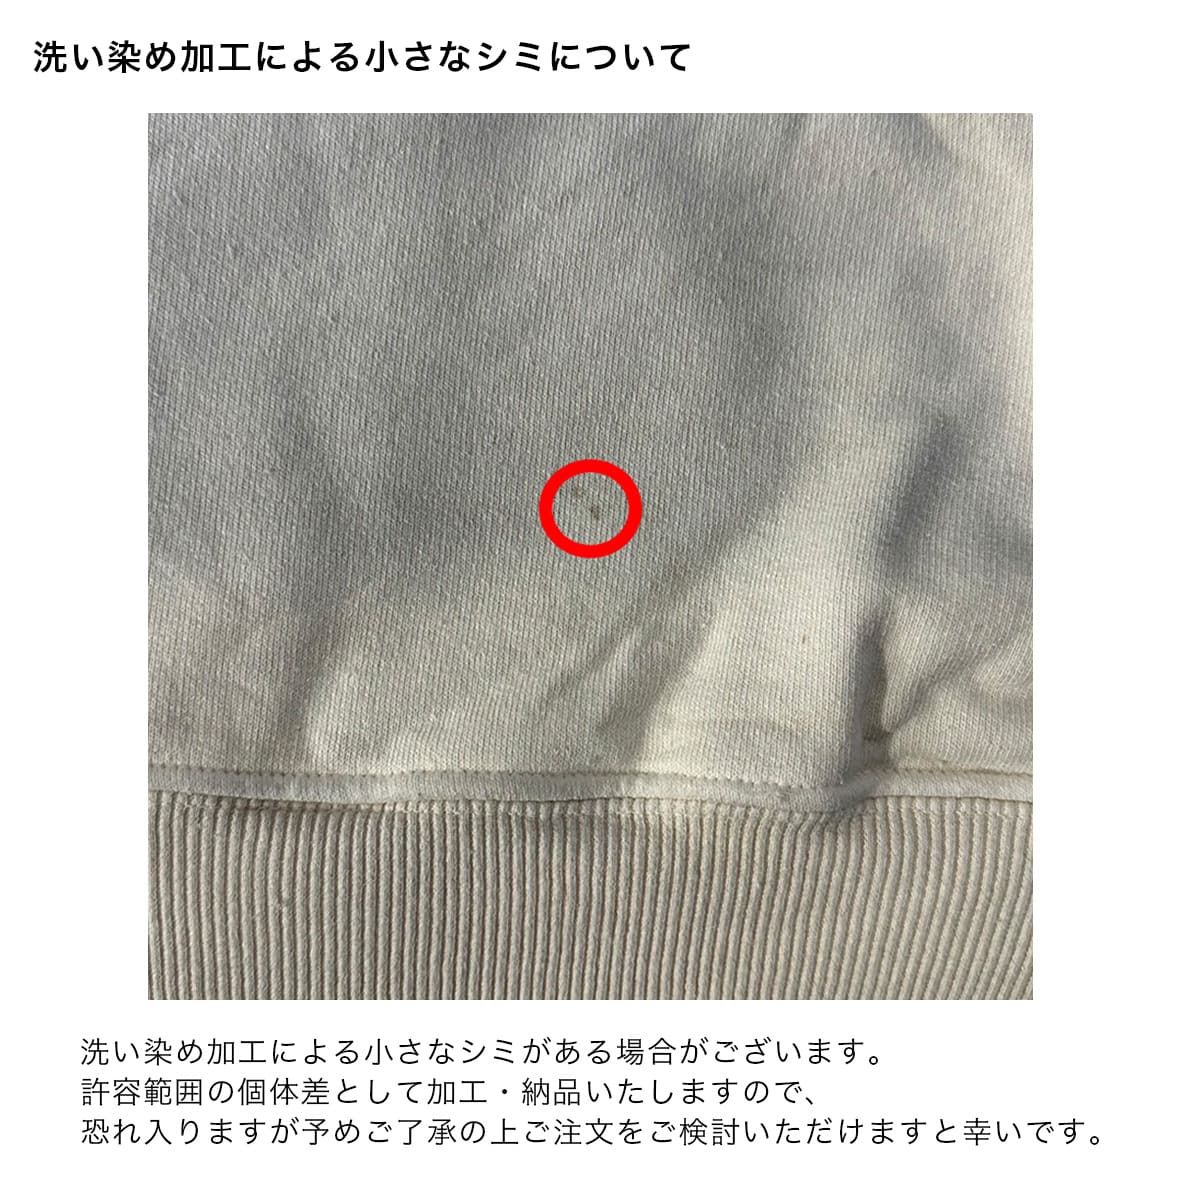 SHAKA WEAR シャカウェア 13.5 oz Los Angeles Garment Dye Sweatpants (品番SWGDP01)